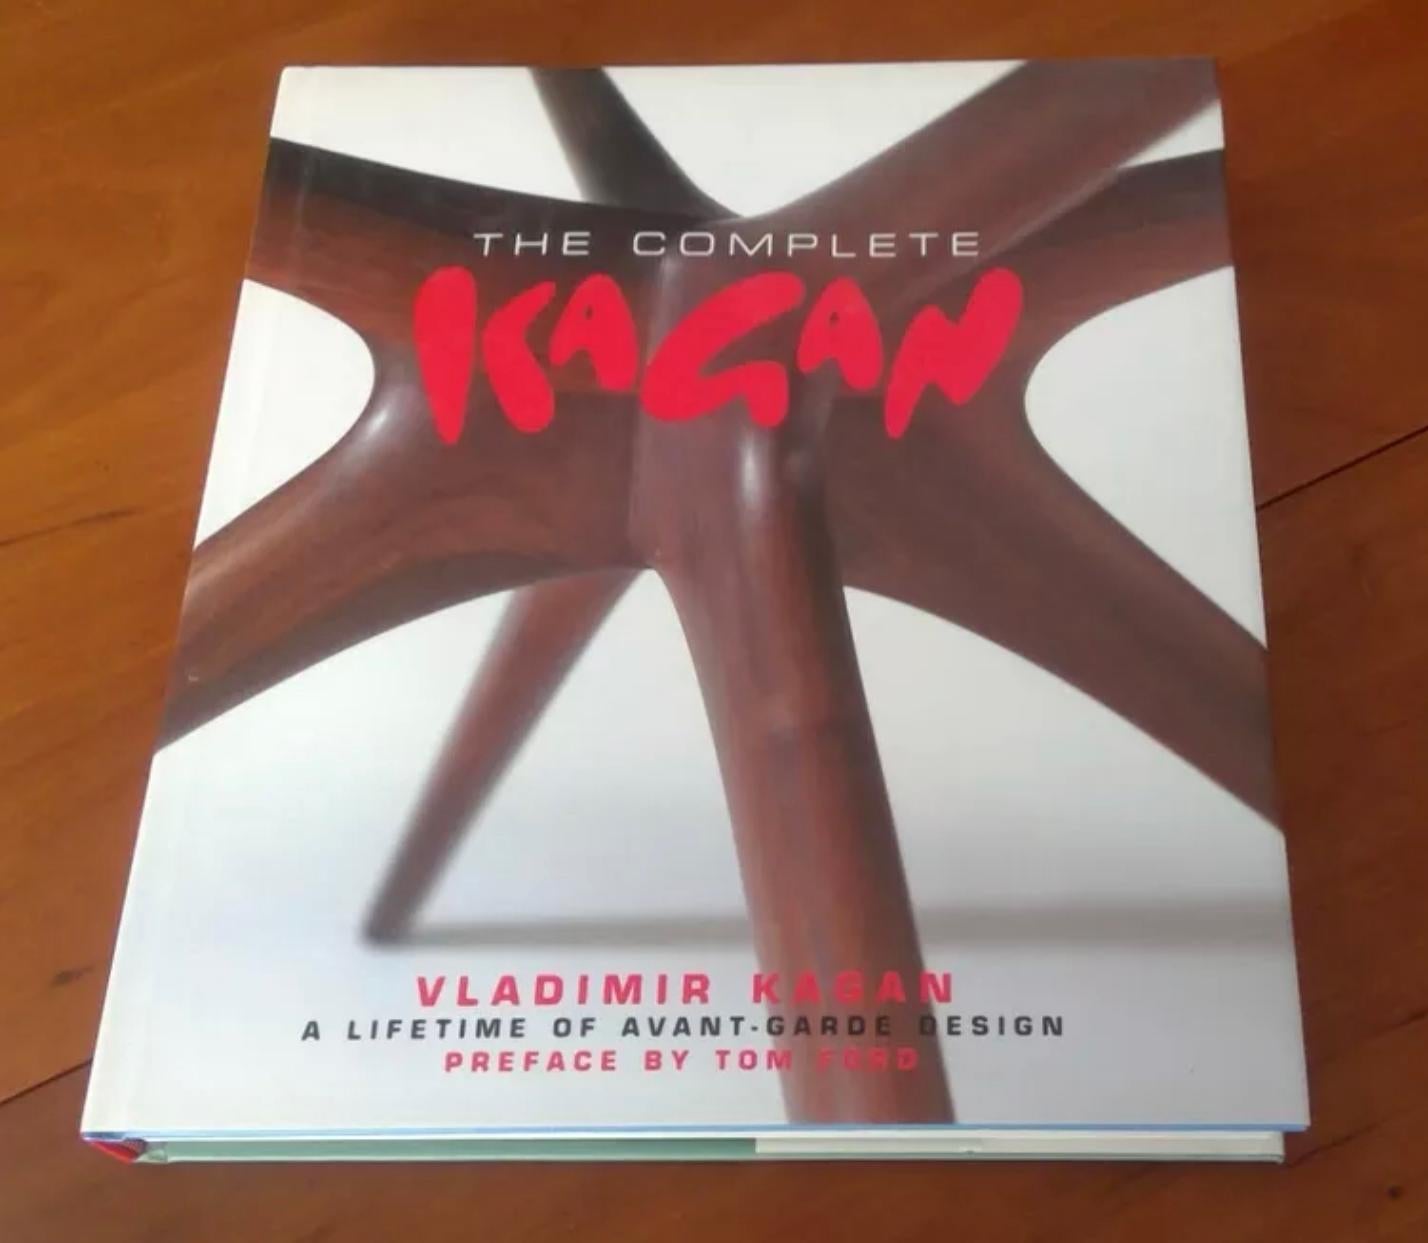 American The Complete Kagan: Vladimir Kagan, A Lifetime of Avant-Garde Design, Signed For Sale